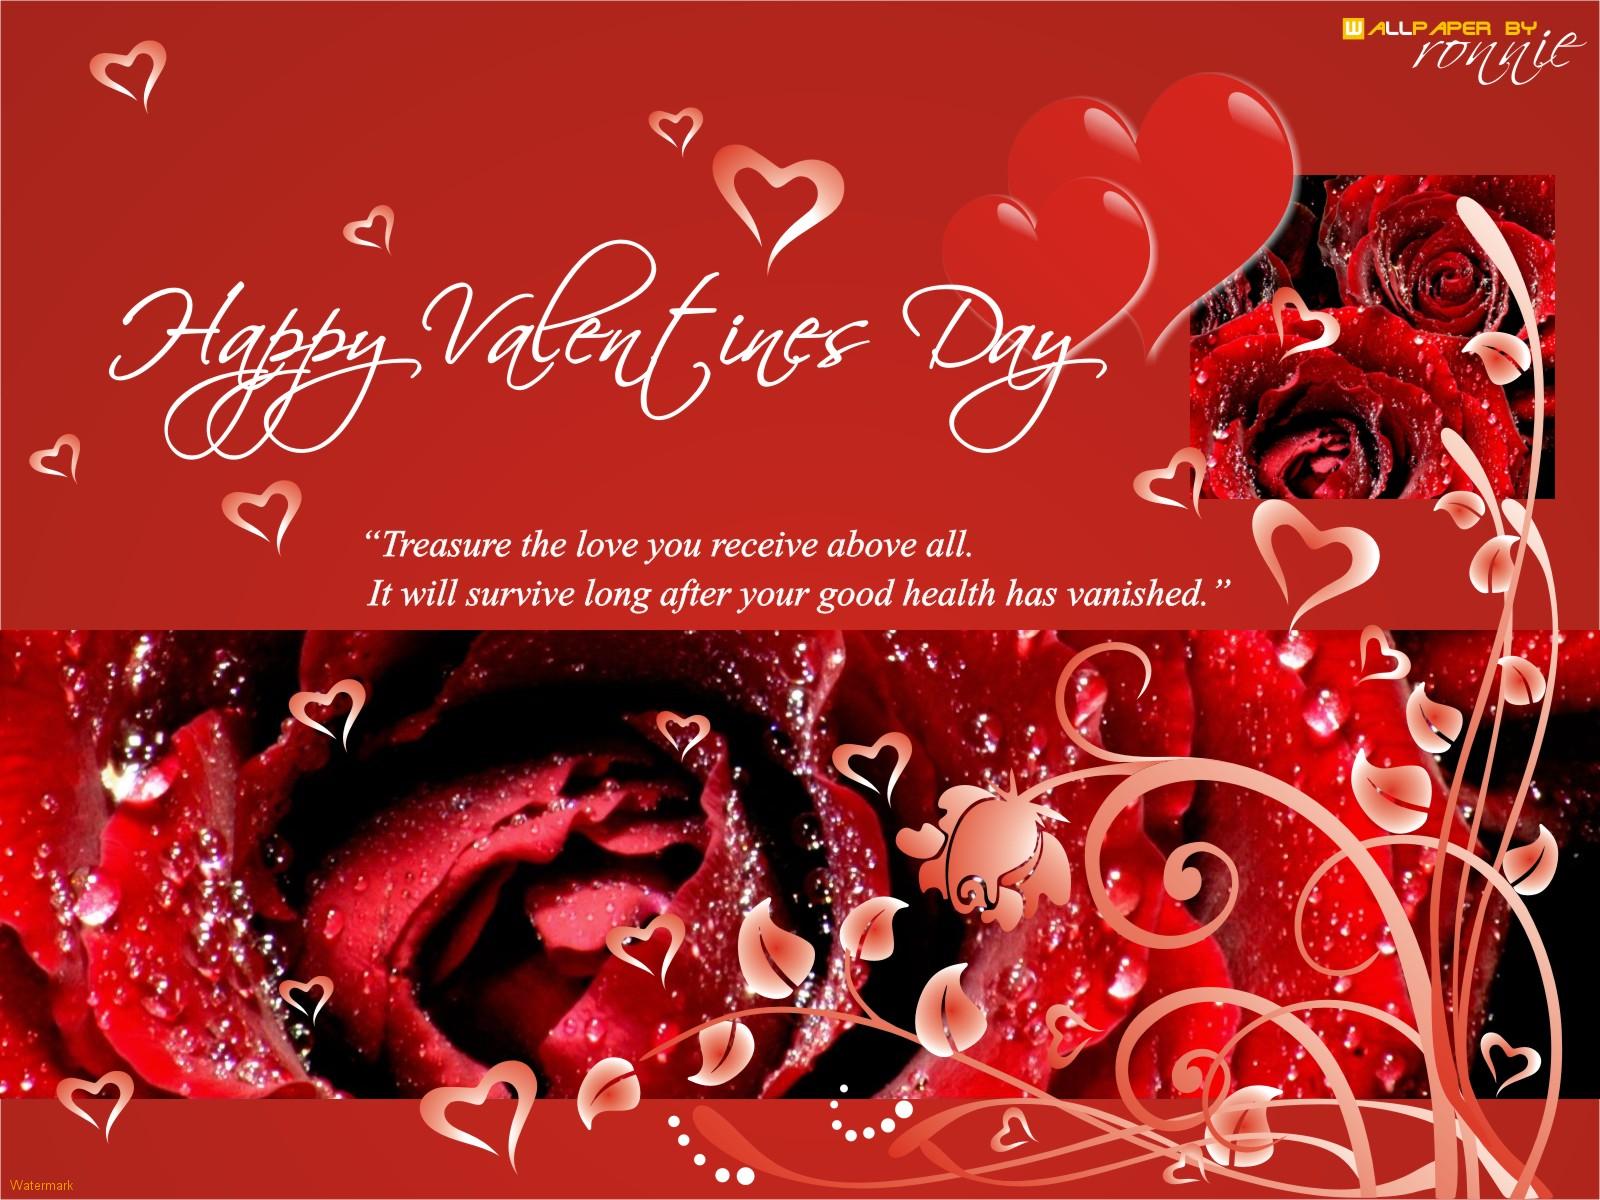 http://1.bp.blogspot.com/-MGTE3TKHxu0/Tv0ZLRra4BI/AAAAAAAAAHU/WcePfPk6Ojg/s1600/valentine-wallpaper-2.jpg